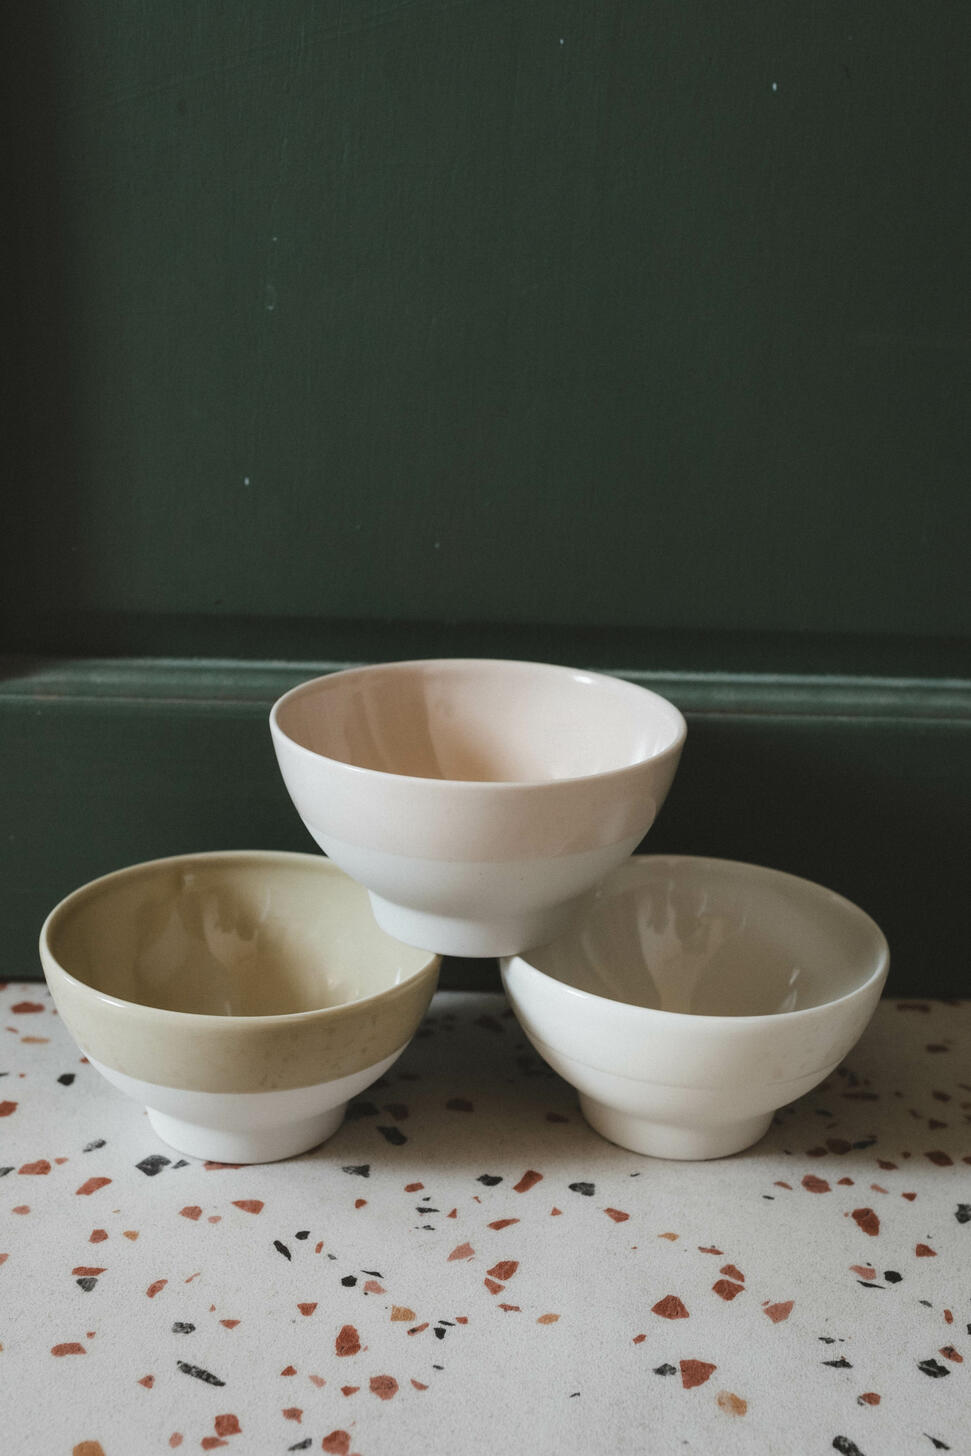 mini  bowl cantine craie ceramic manufacturer